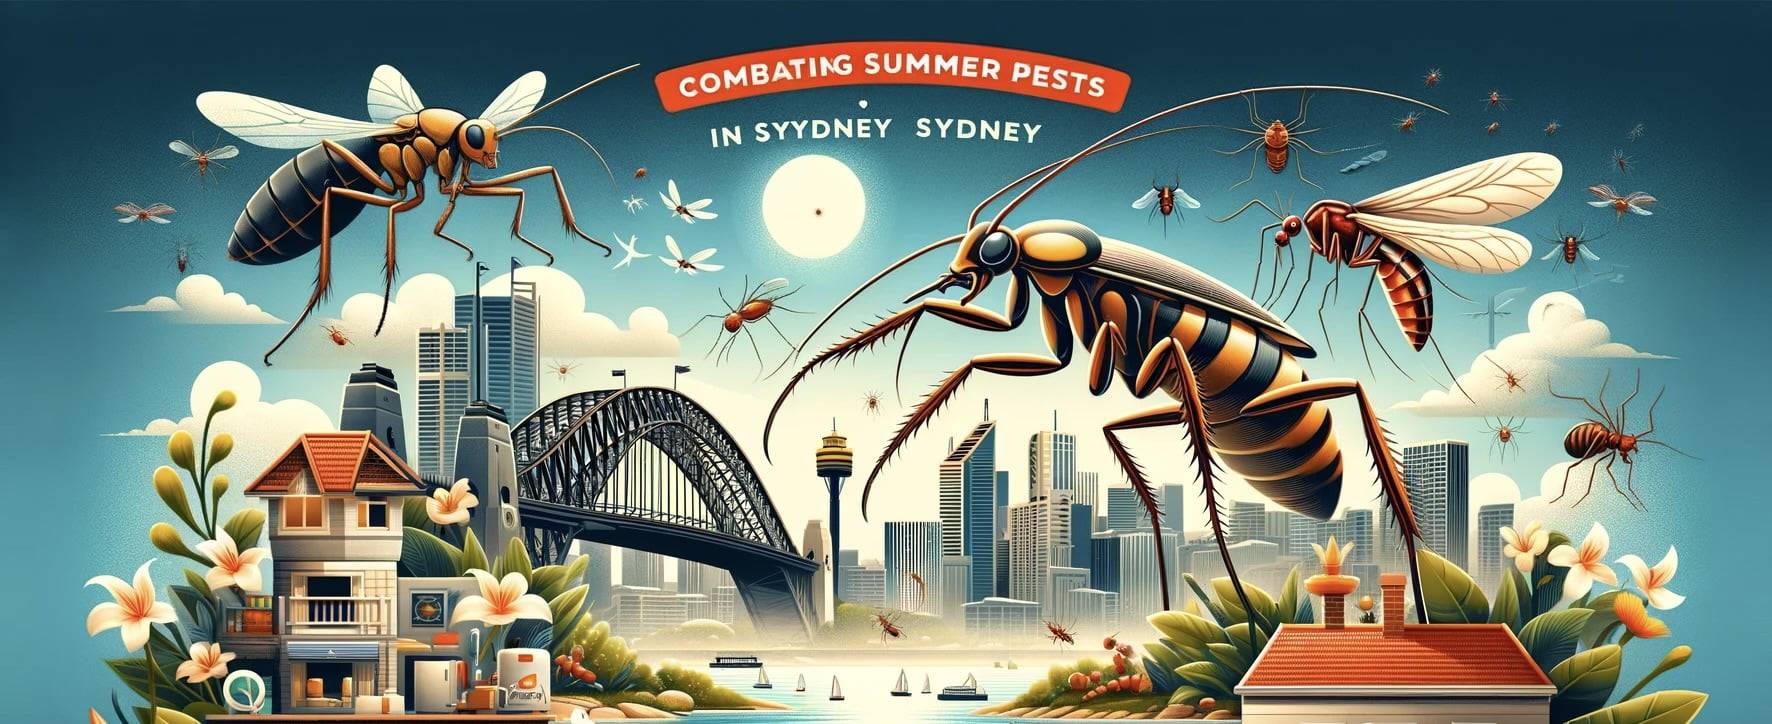 Seasonal Pests This Summer in Sydney